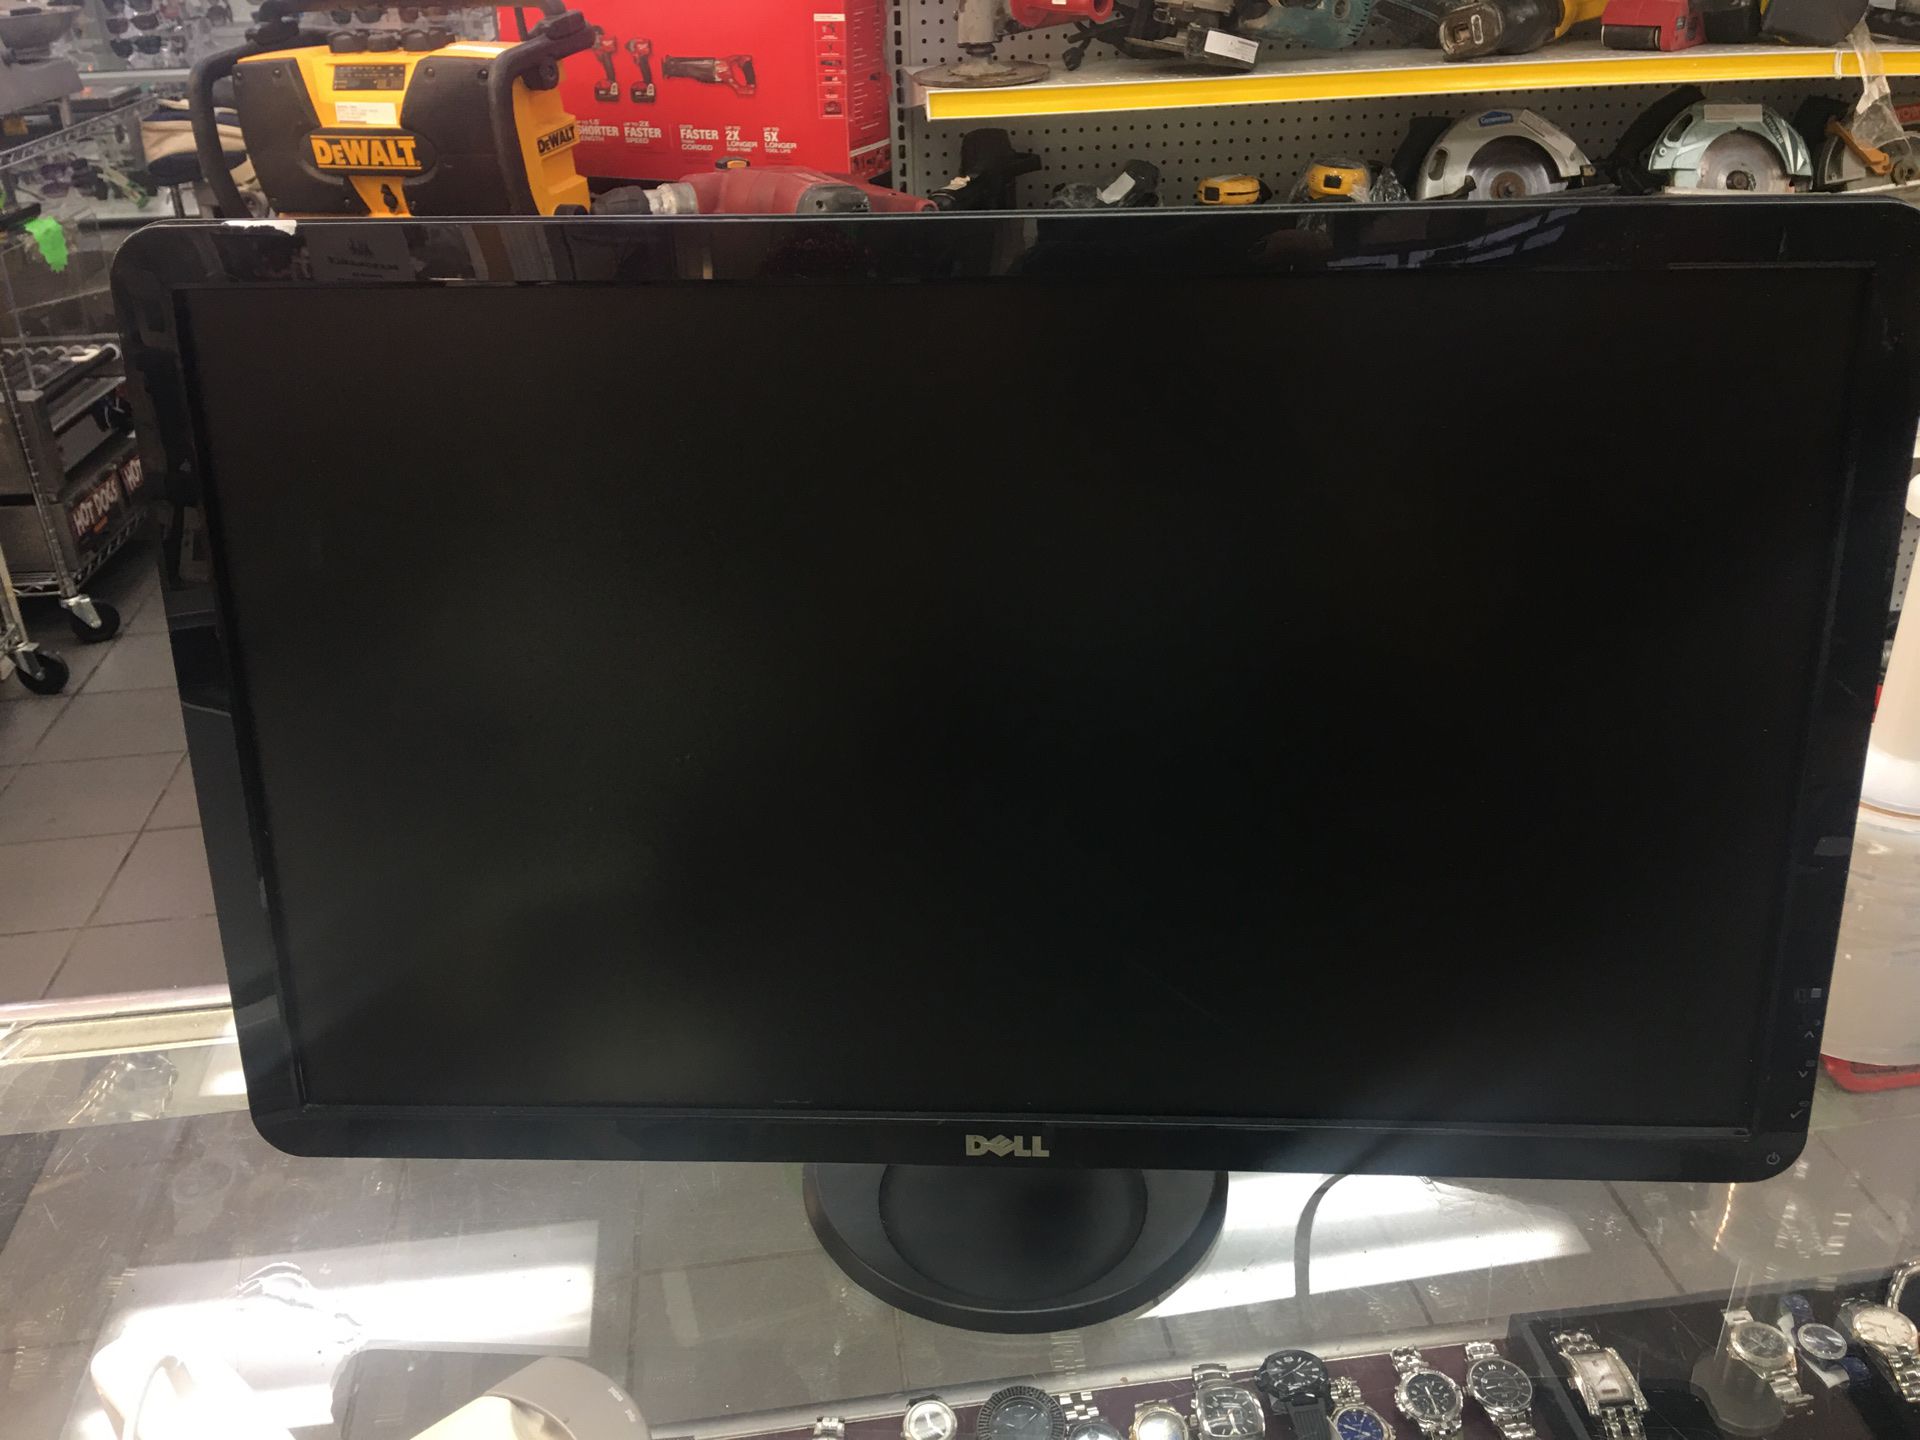 Dell 24” DVI/HDMI 1080p LCD computer monitor with HDCP widescreen